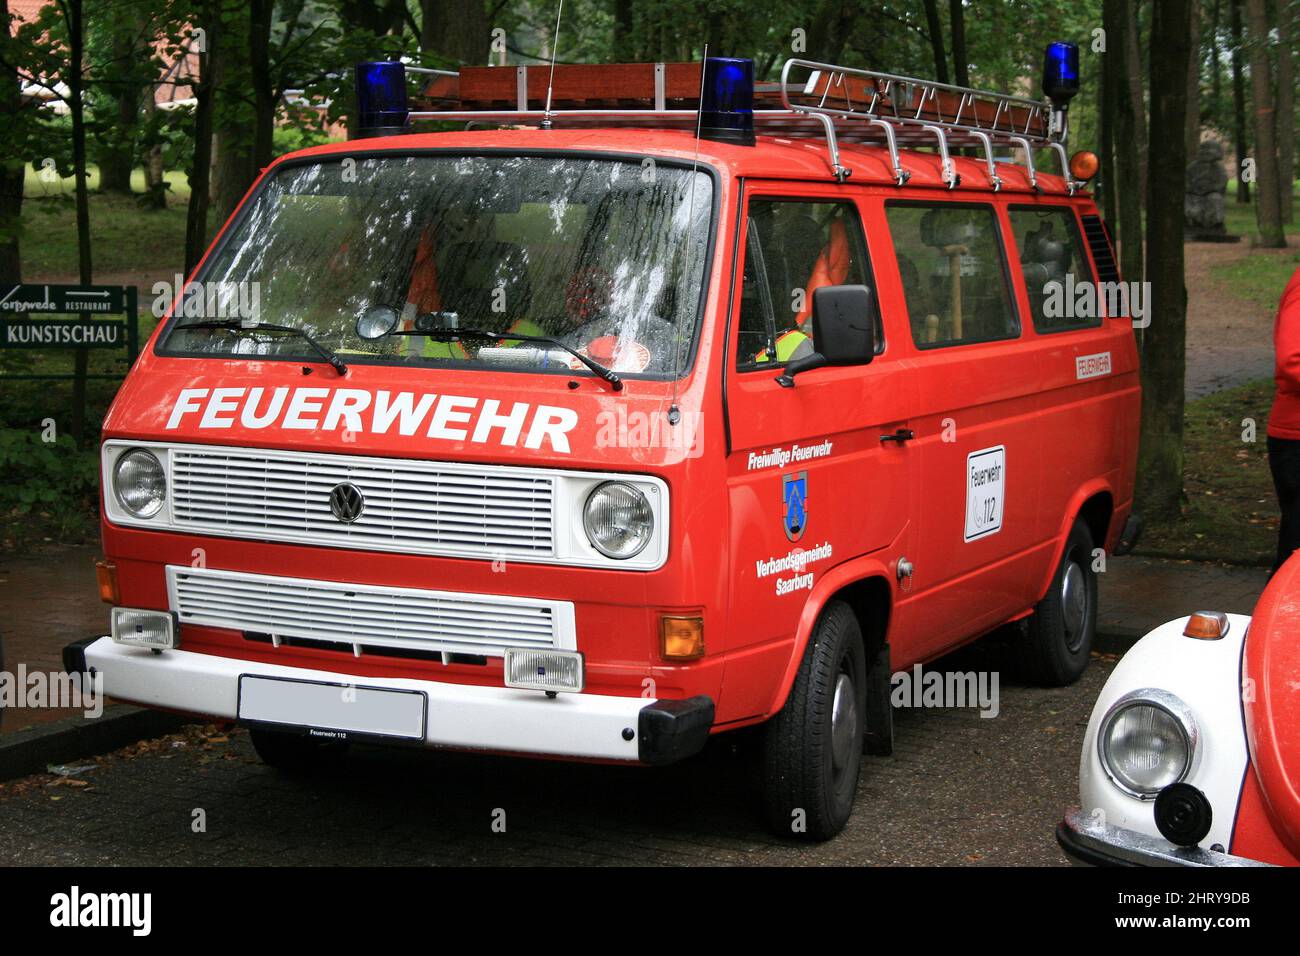 a volkswagen fire truck at a fire brigade meeting Stock Photo